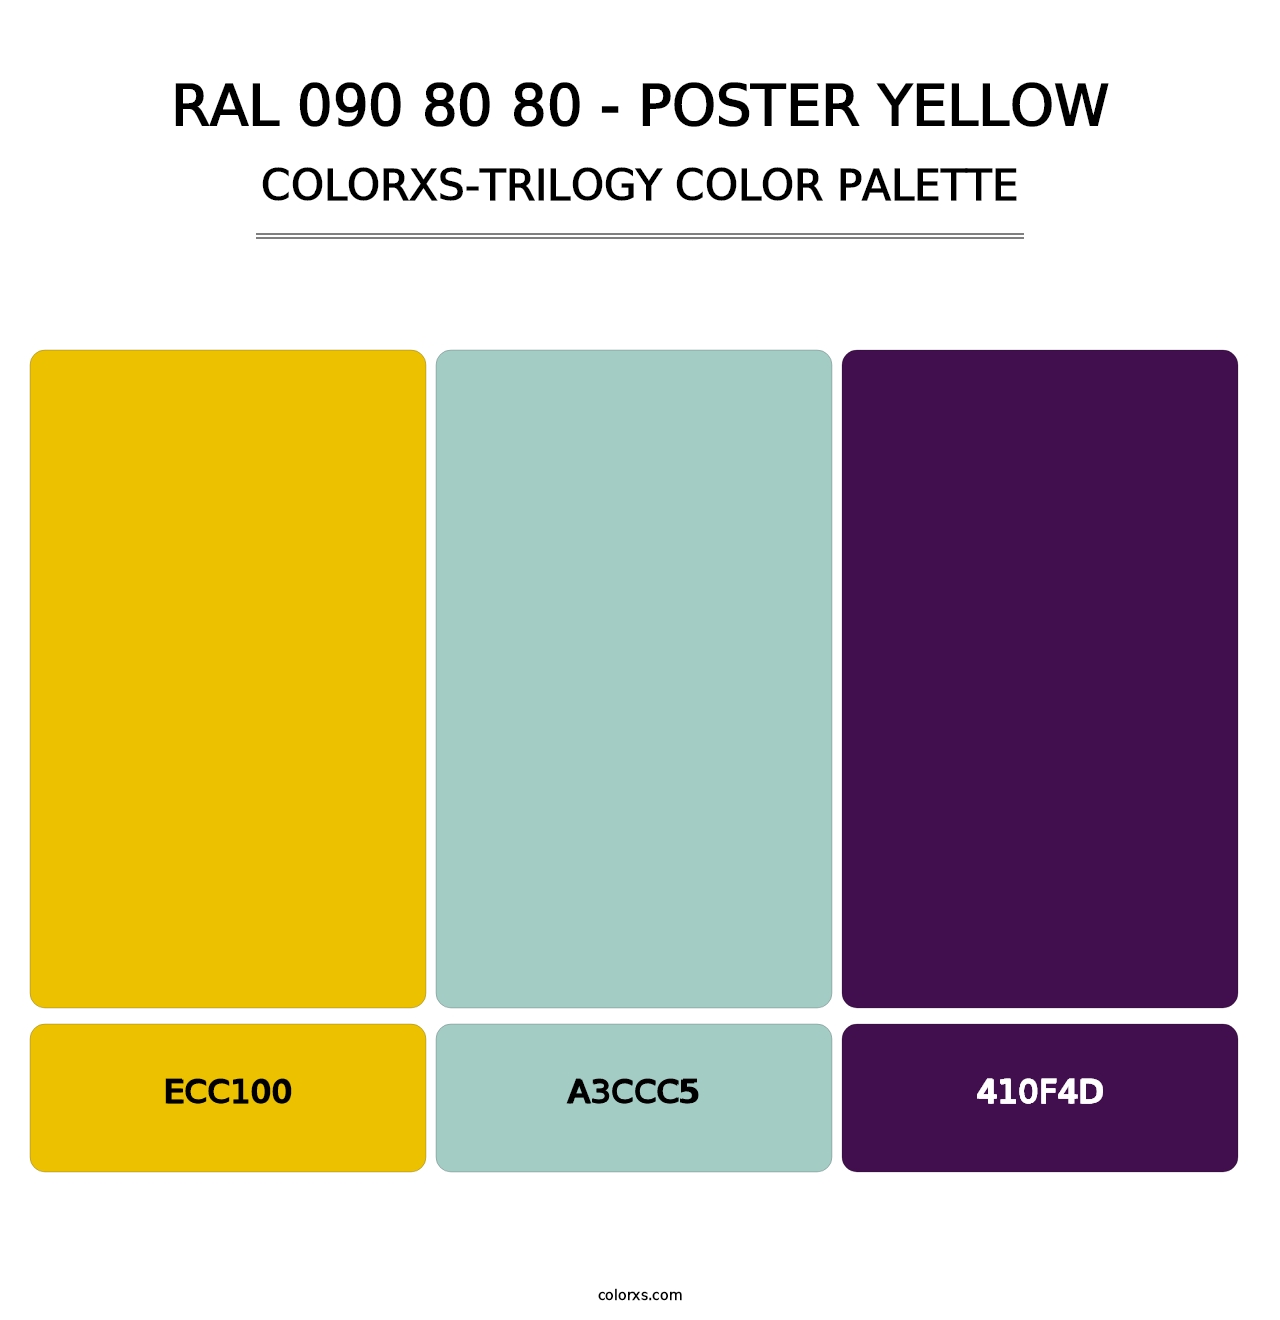 RAL 090 80 80 - Poster Yellow - Colorxs Trilogy Palette